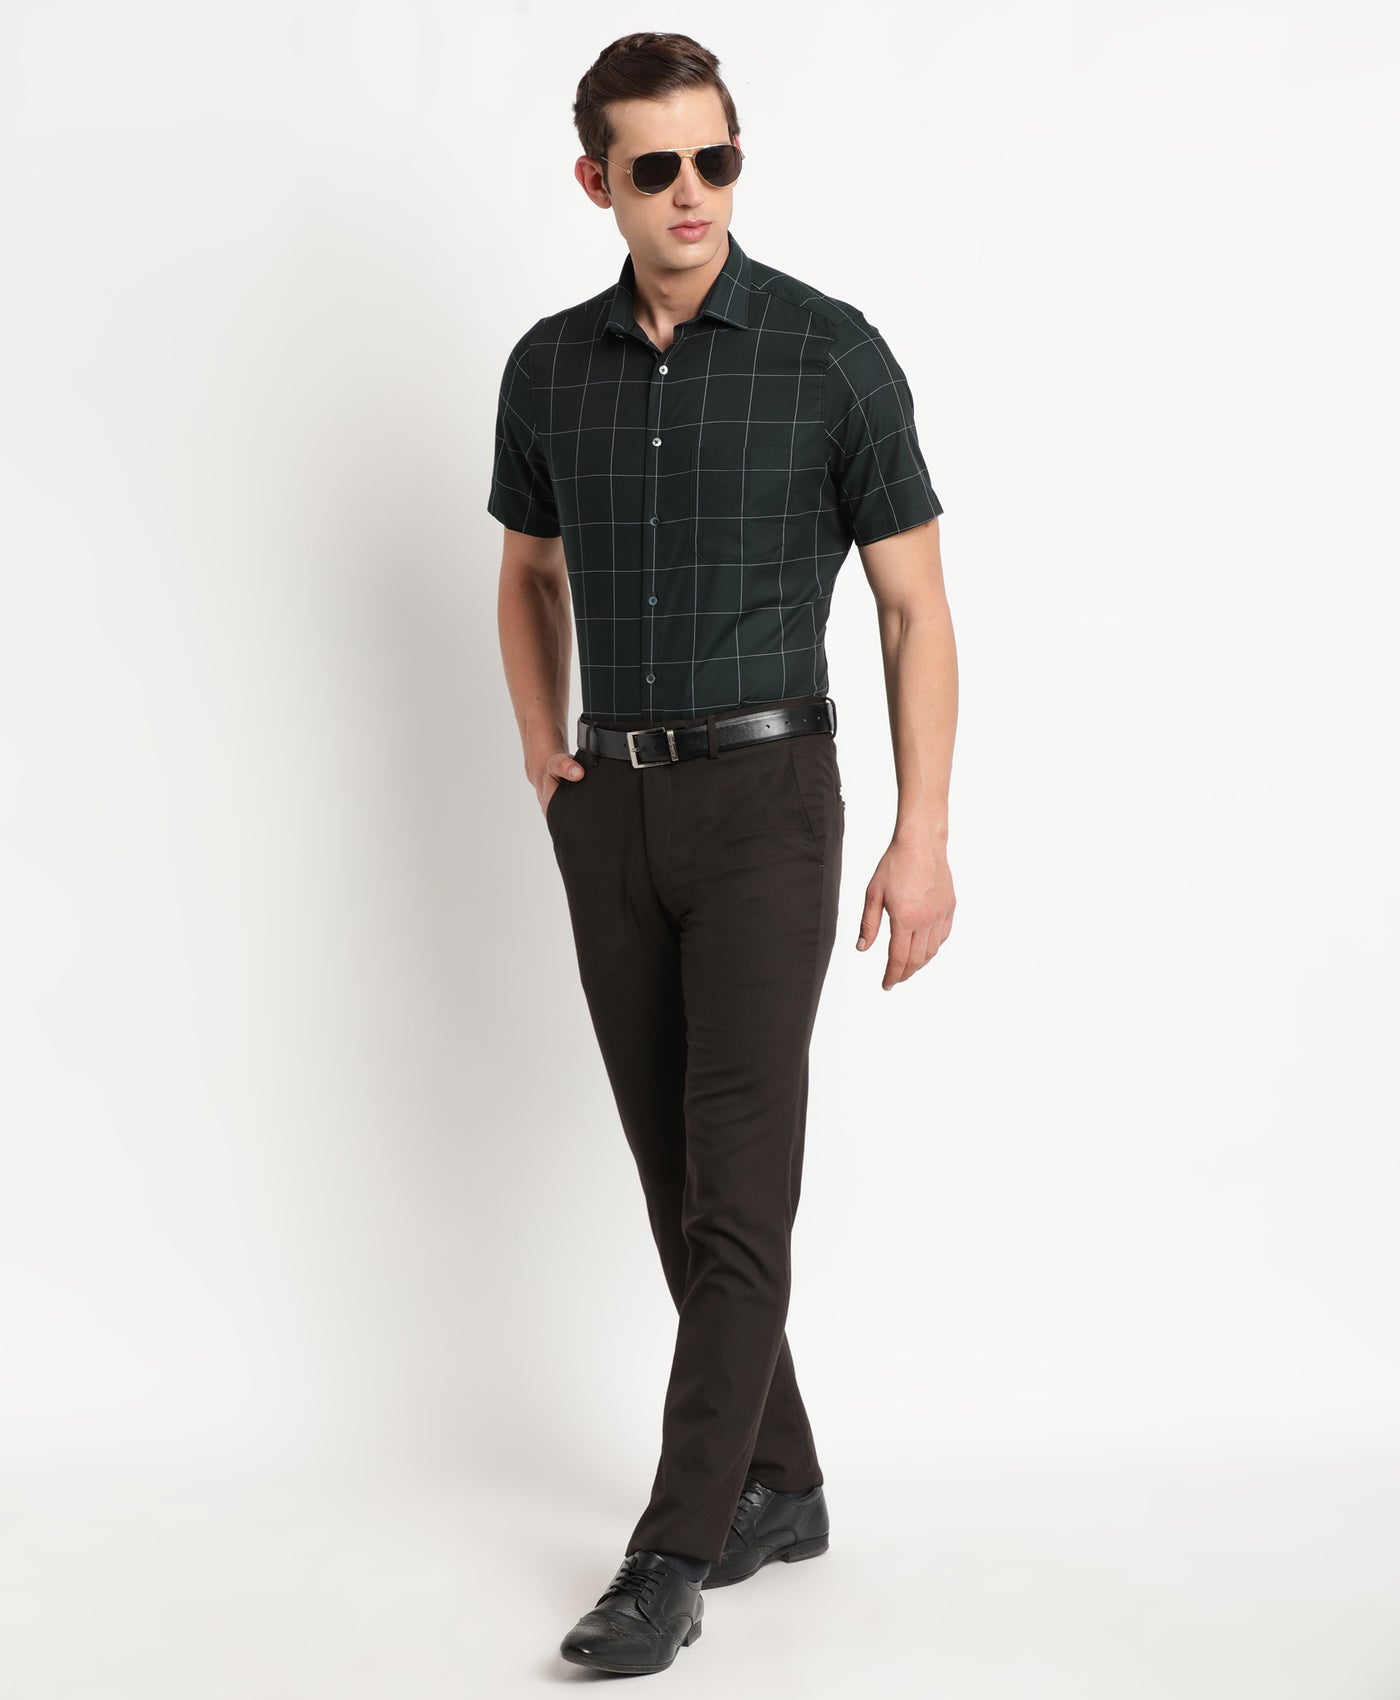 100% Cotton Dark Green Checkered Regular Fit Half Sleeve Formal Shirt